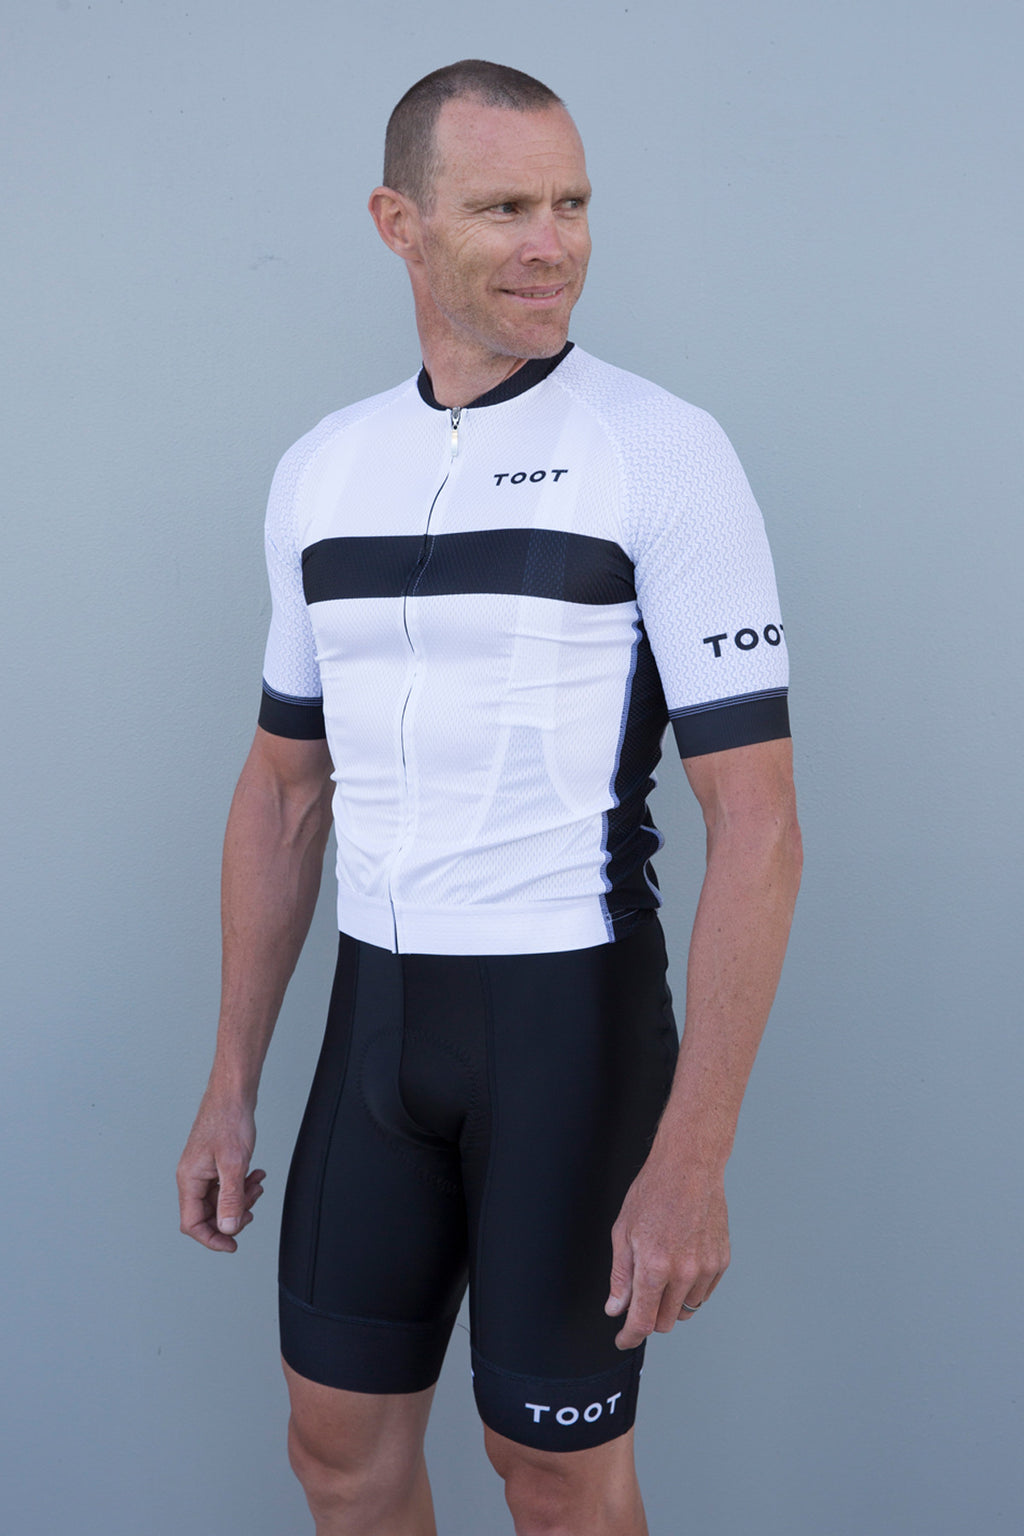 black white cycling jersey